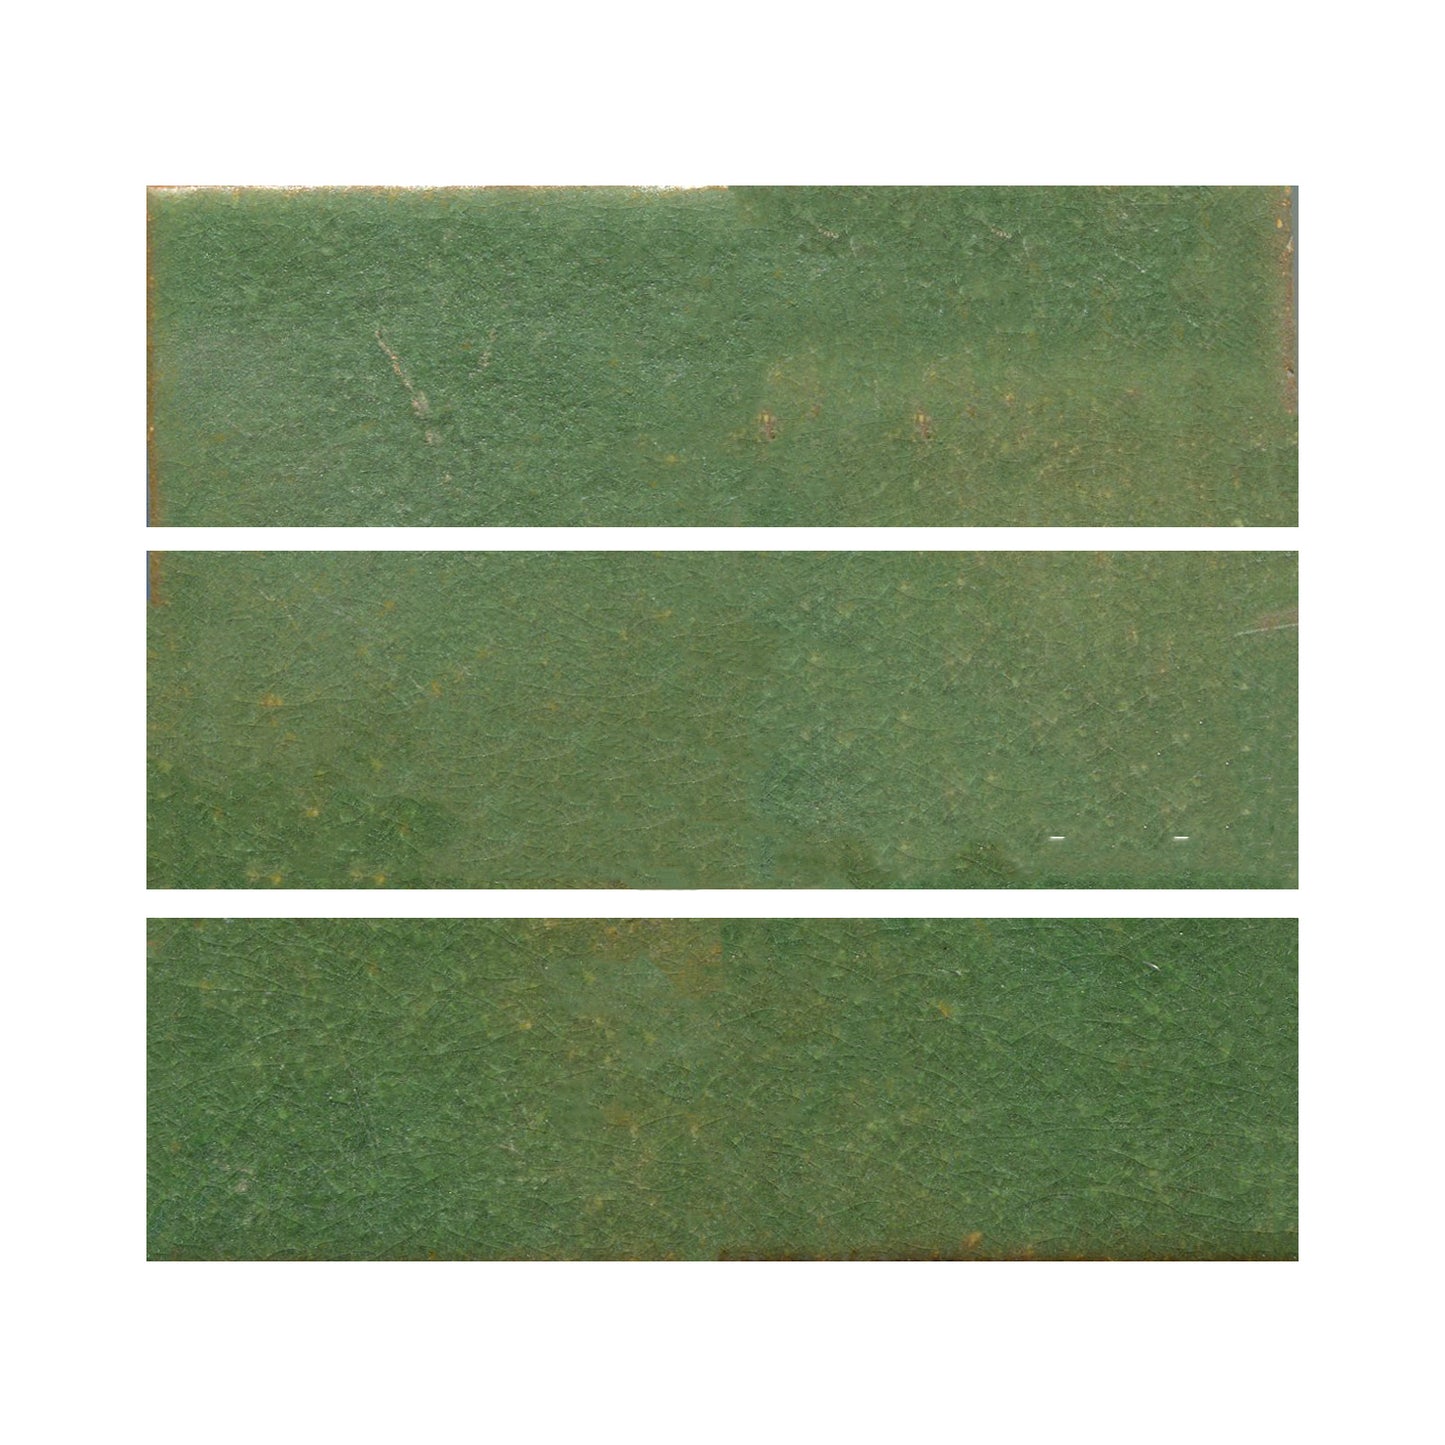 Avocado green 3x8 field tile